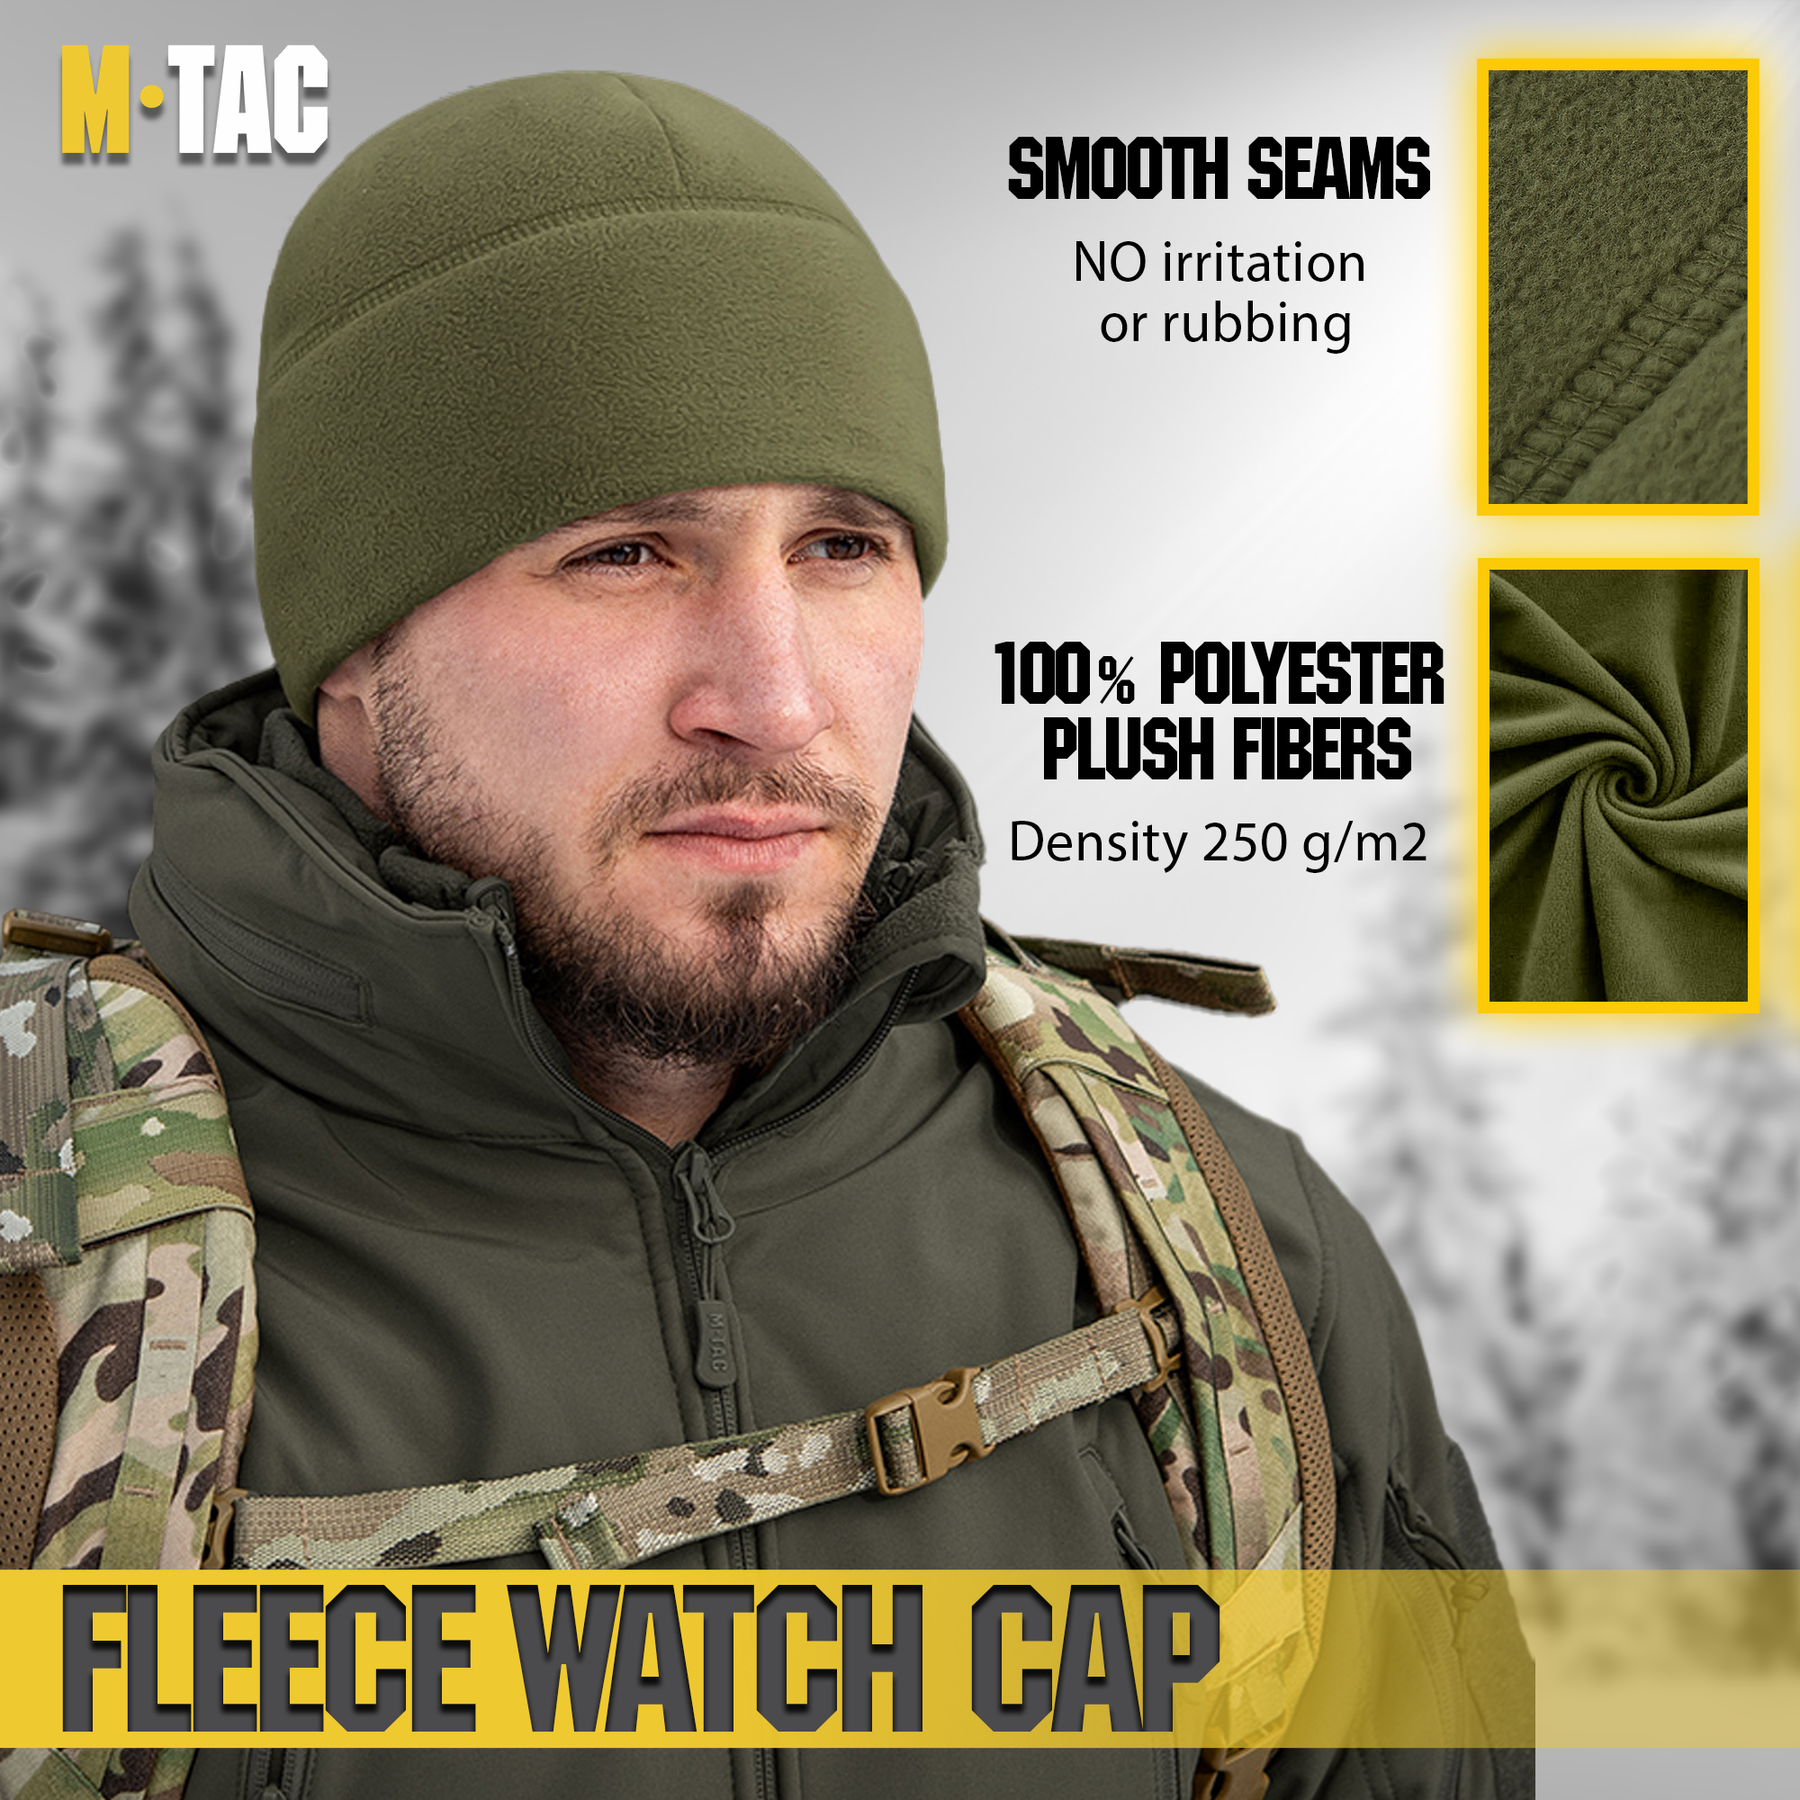 M-Tac Elite Fleece Watch Cap M-TAC (250 g/m2) – with Slimtex